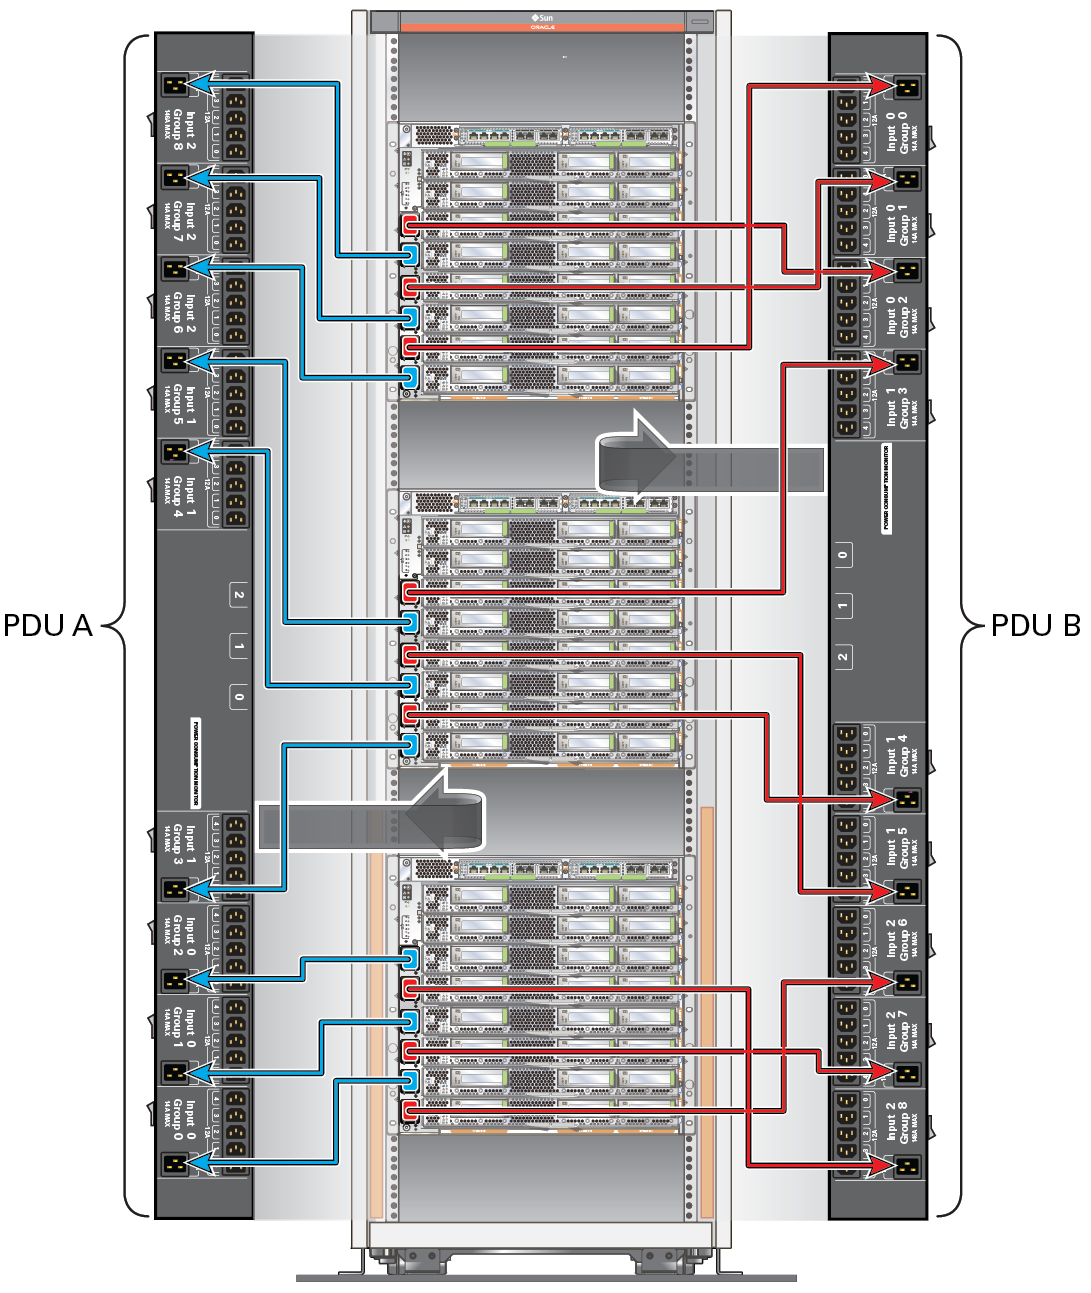 image:图中显示了 SPARC M7-8 服务器电源和 PDU 之间的电源线与 PDU 关系。